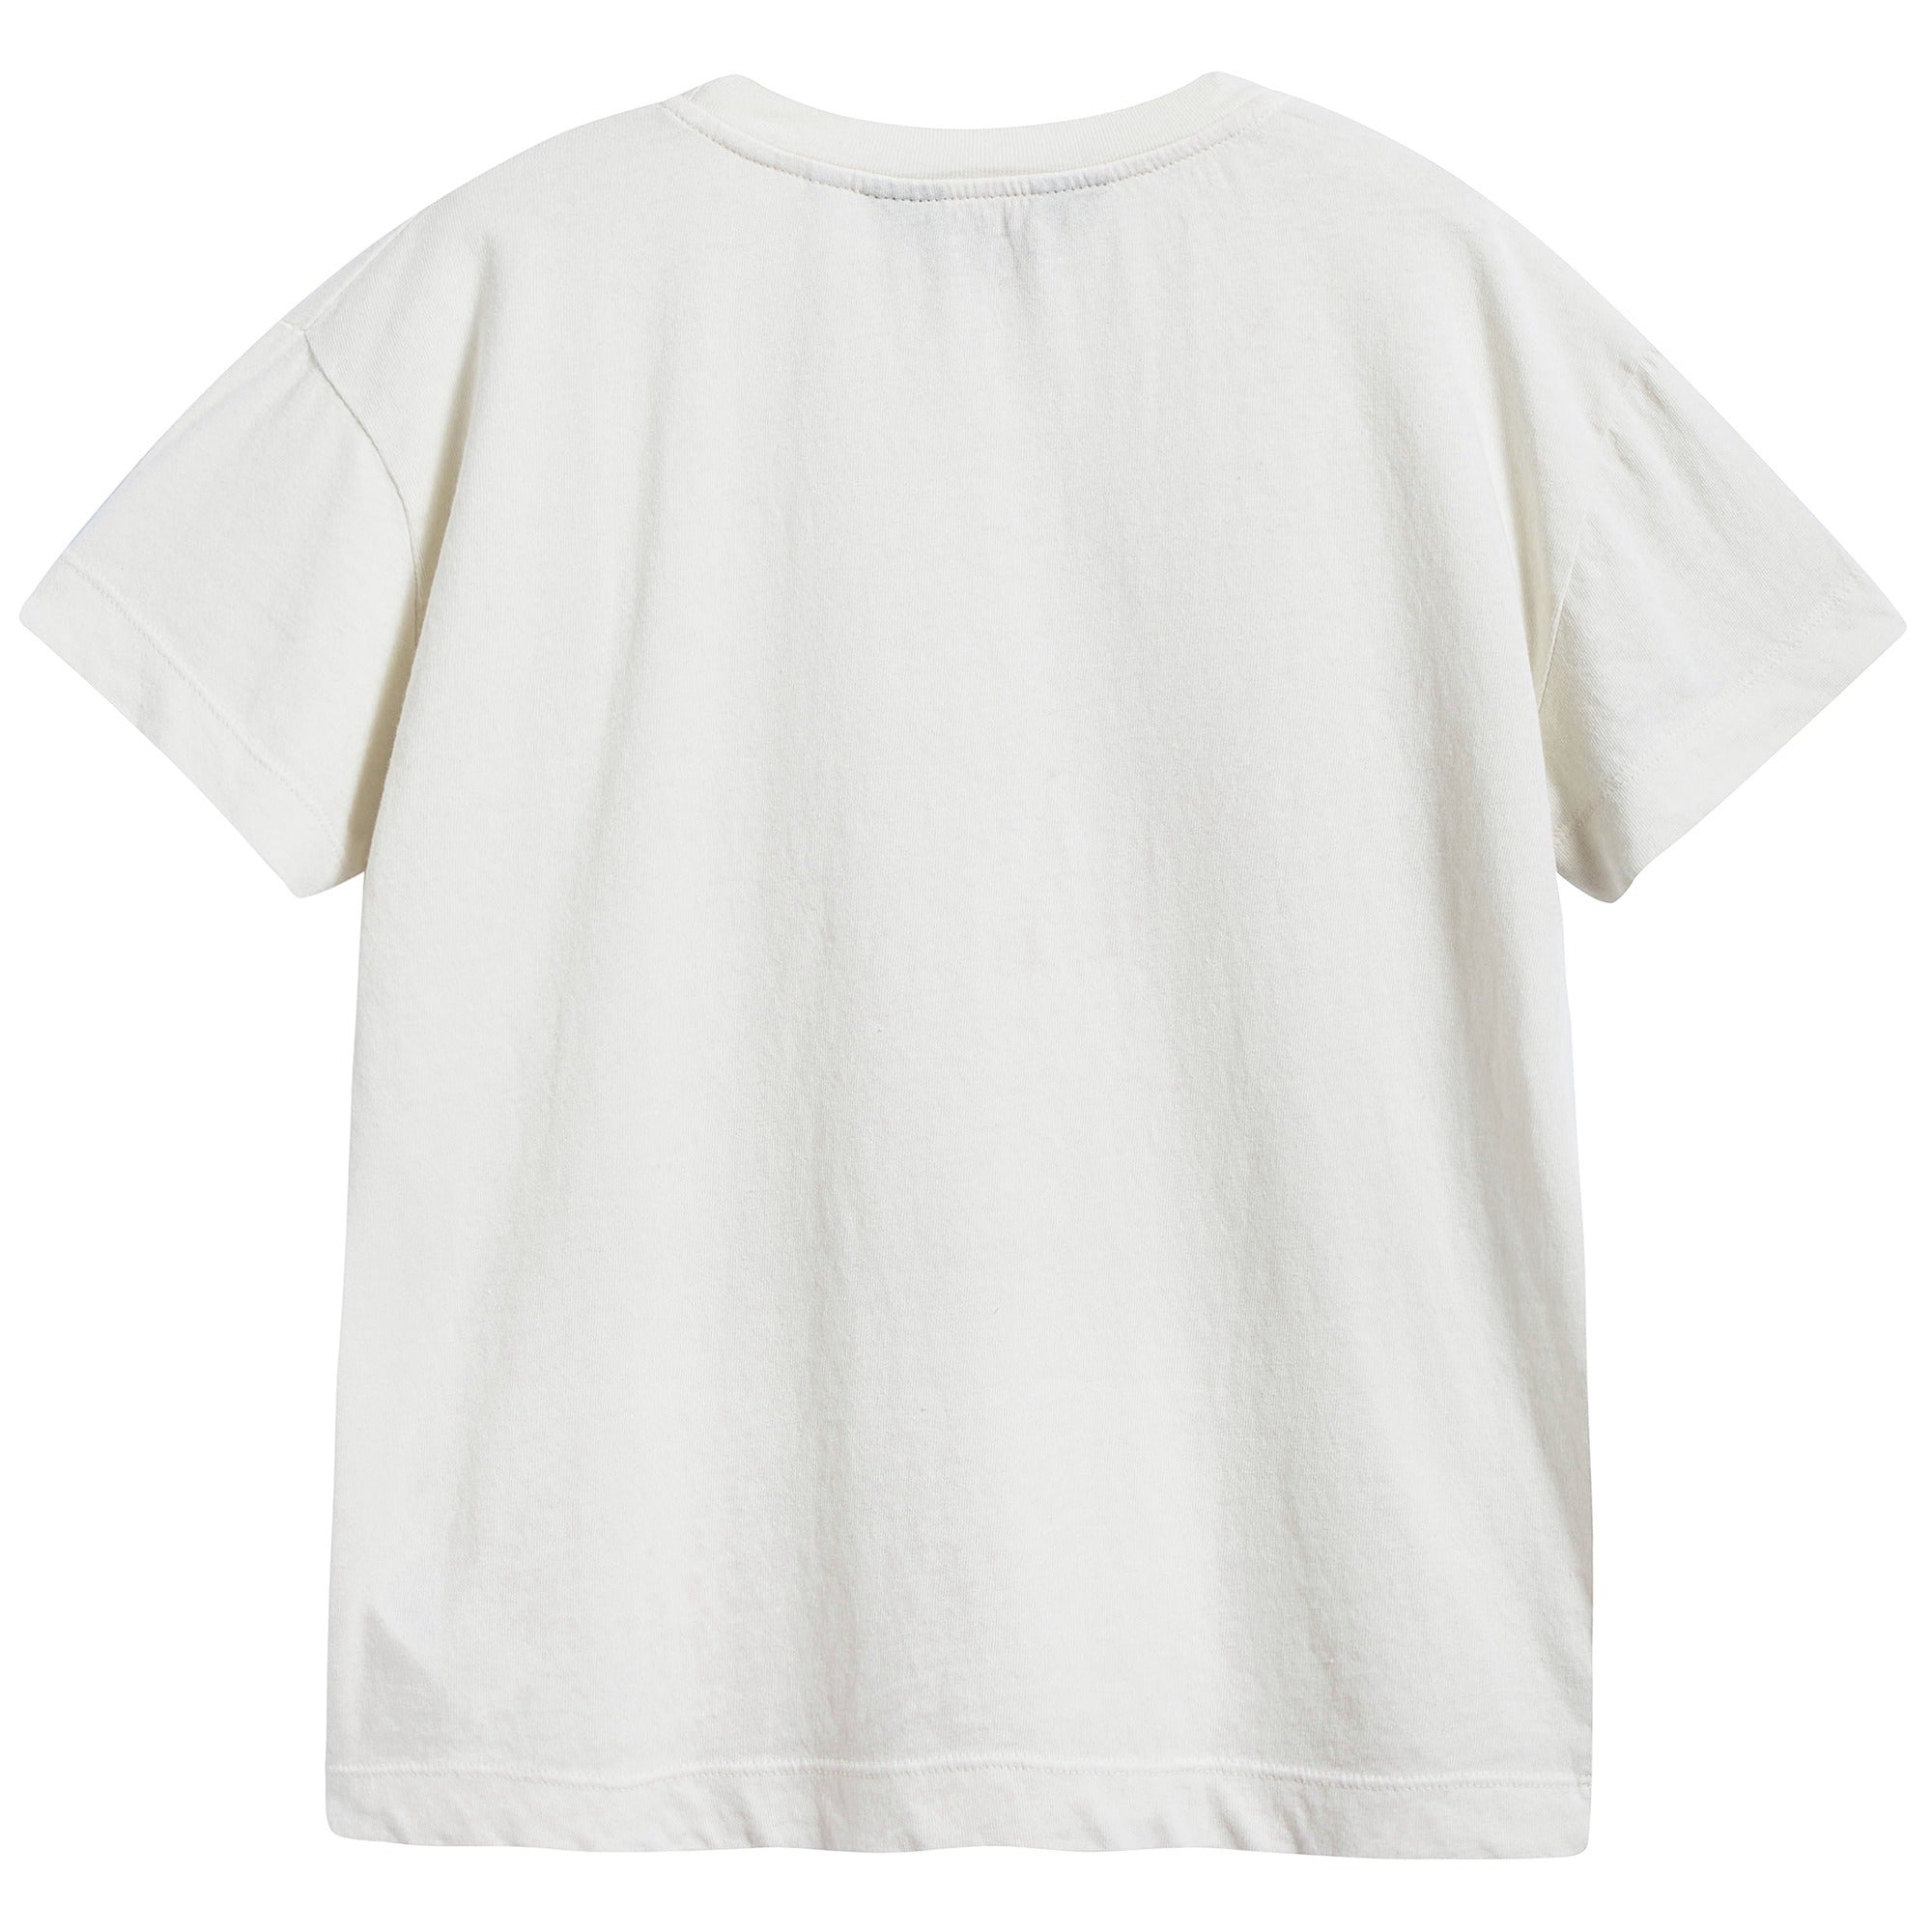 Girls  Raw  White  Dog  Cotton  T-shirt